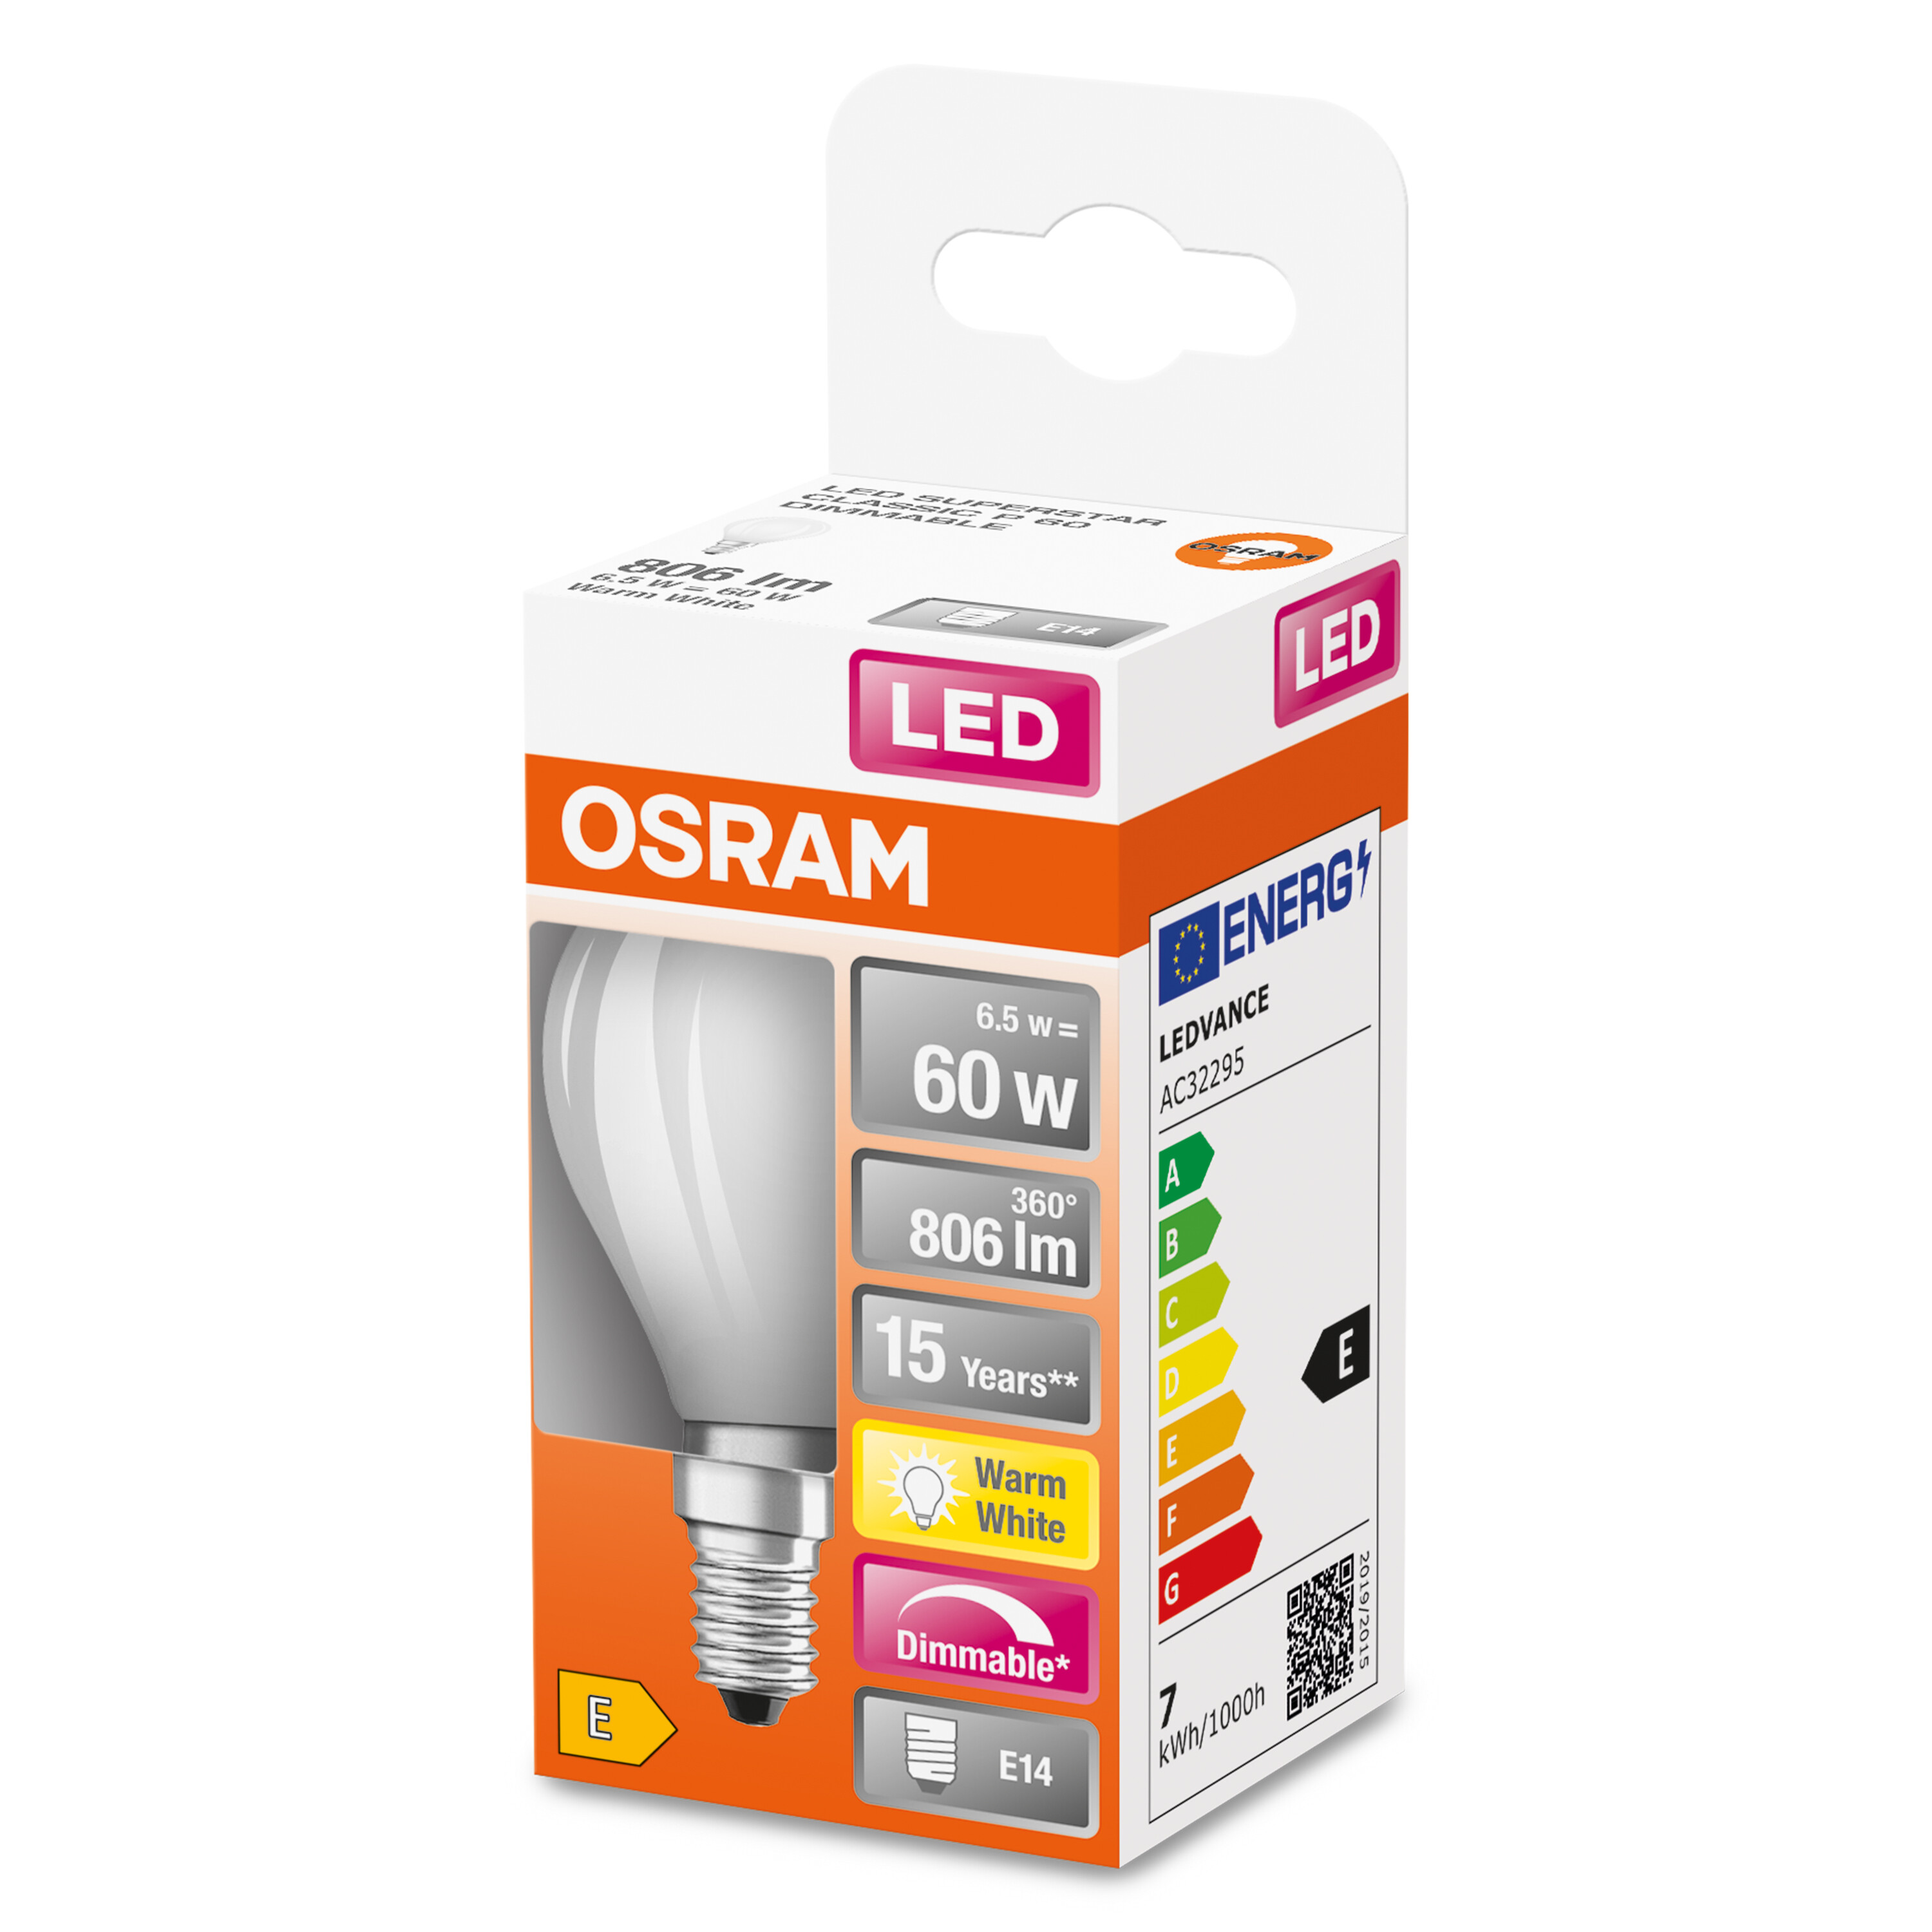 P CLASSIC Warmweiß Retrofit LED 806 Lumen LED Lampe OSRAM  DIM